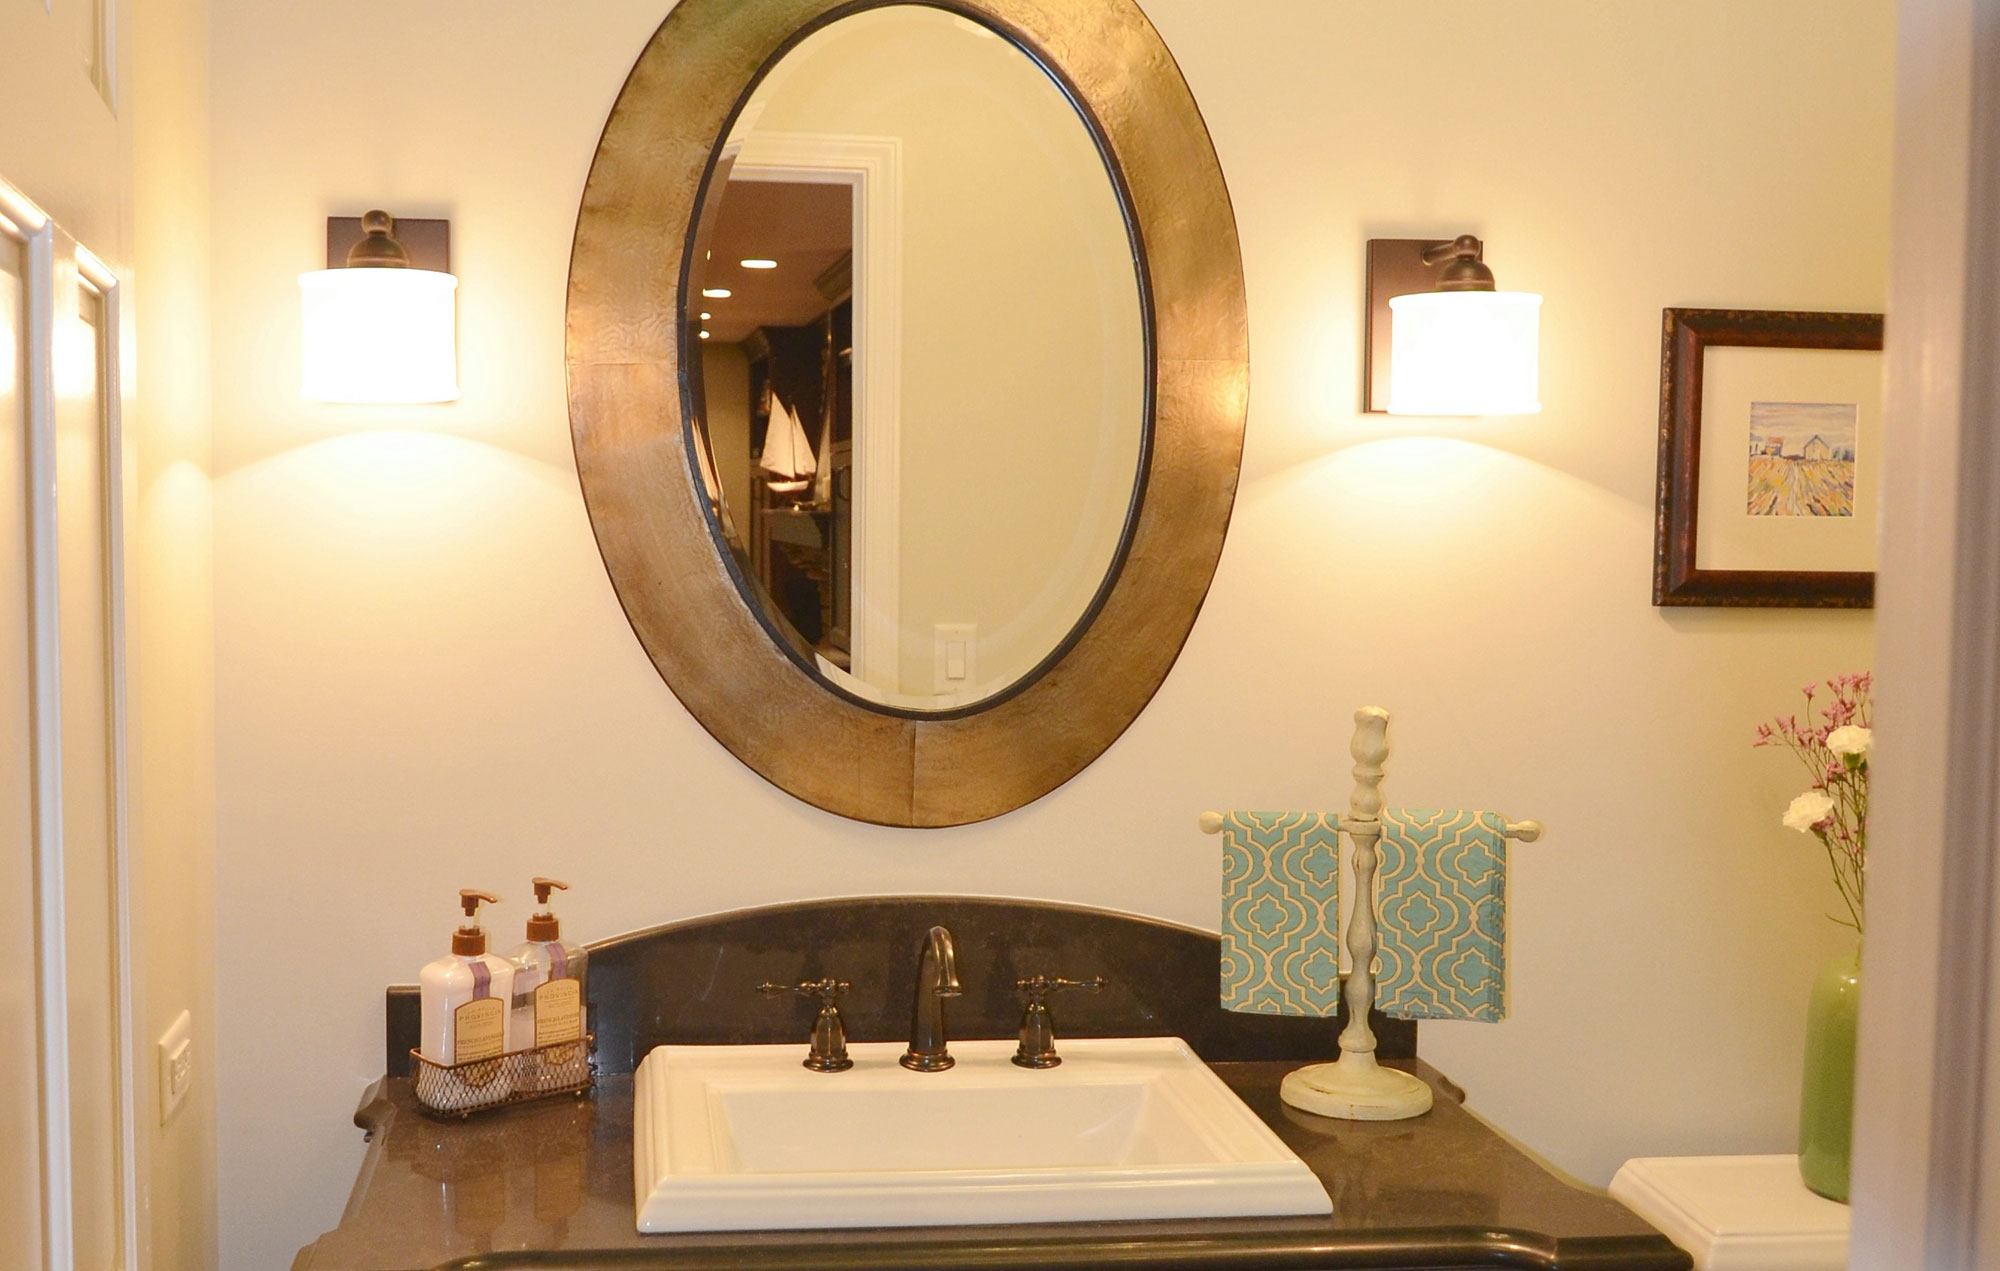 the kitchen master custom vanity oval mirror double pendant lights